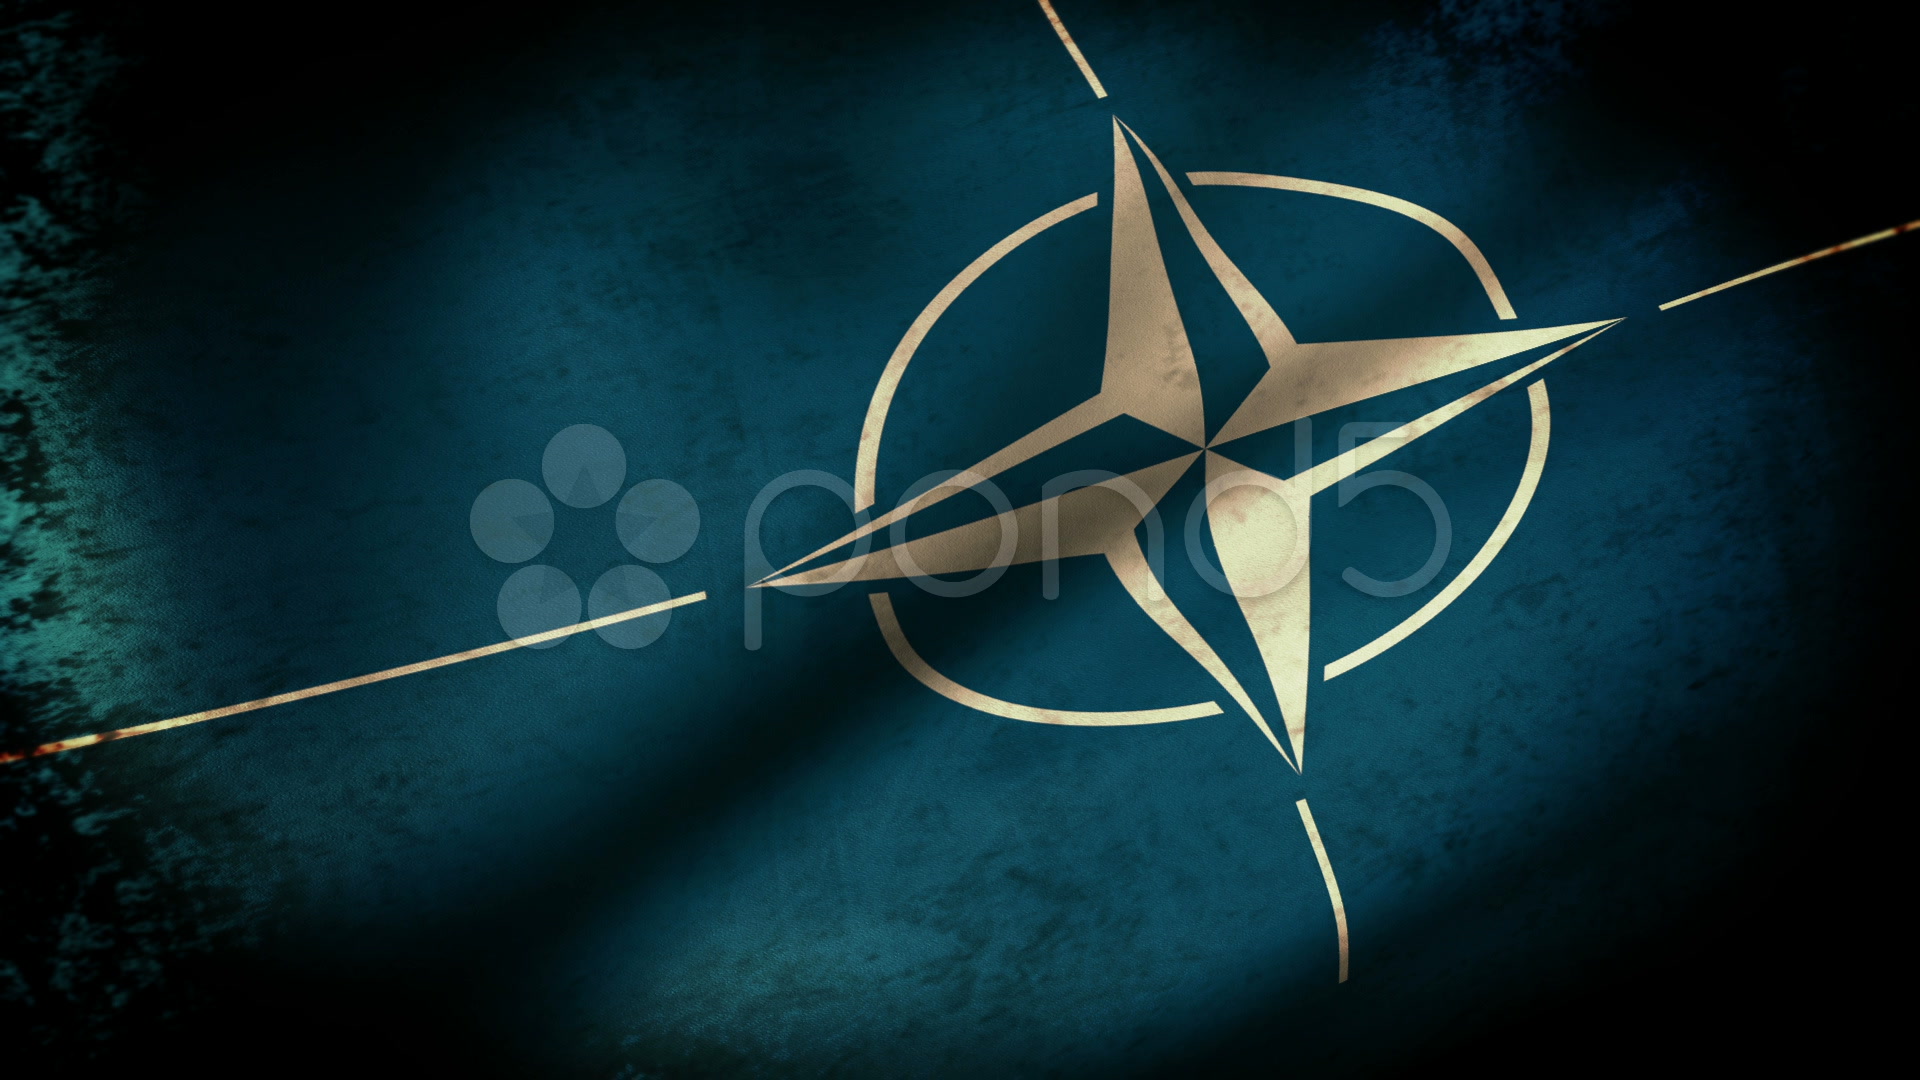 NATO Flag Waving, grunge look ~ Stock Video #8640730 | Pond5